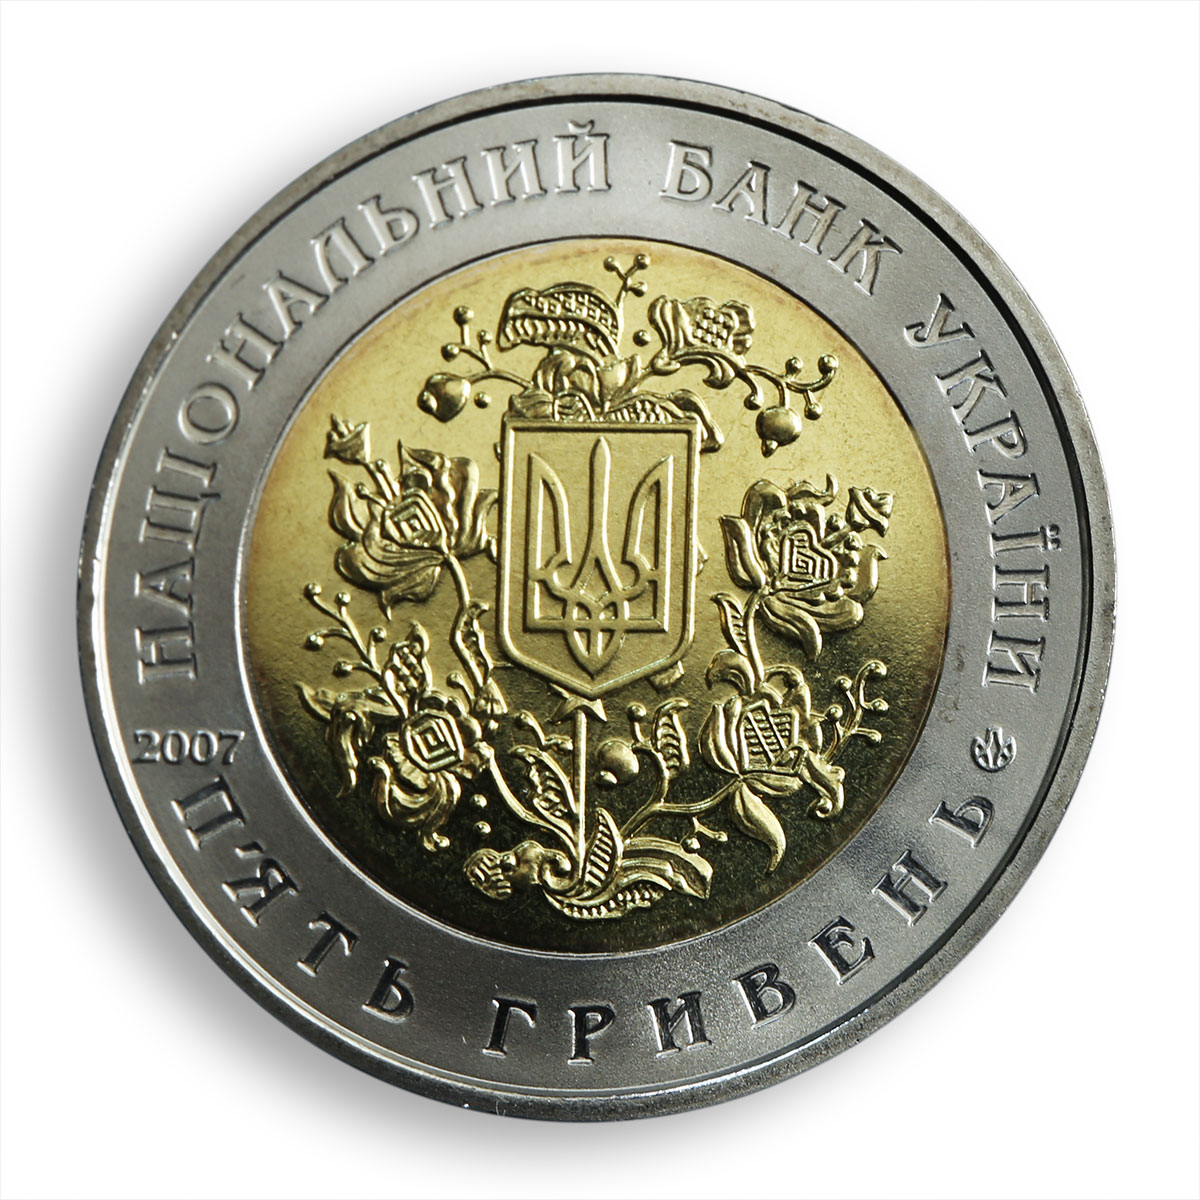 Ukraine 5 hryvnia XVI annual parliamentary session of OSCE bimetal coin 2007